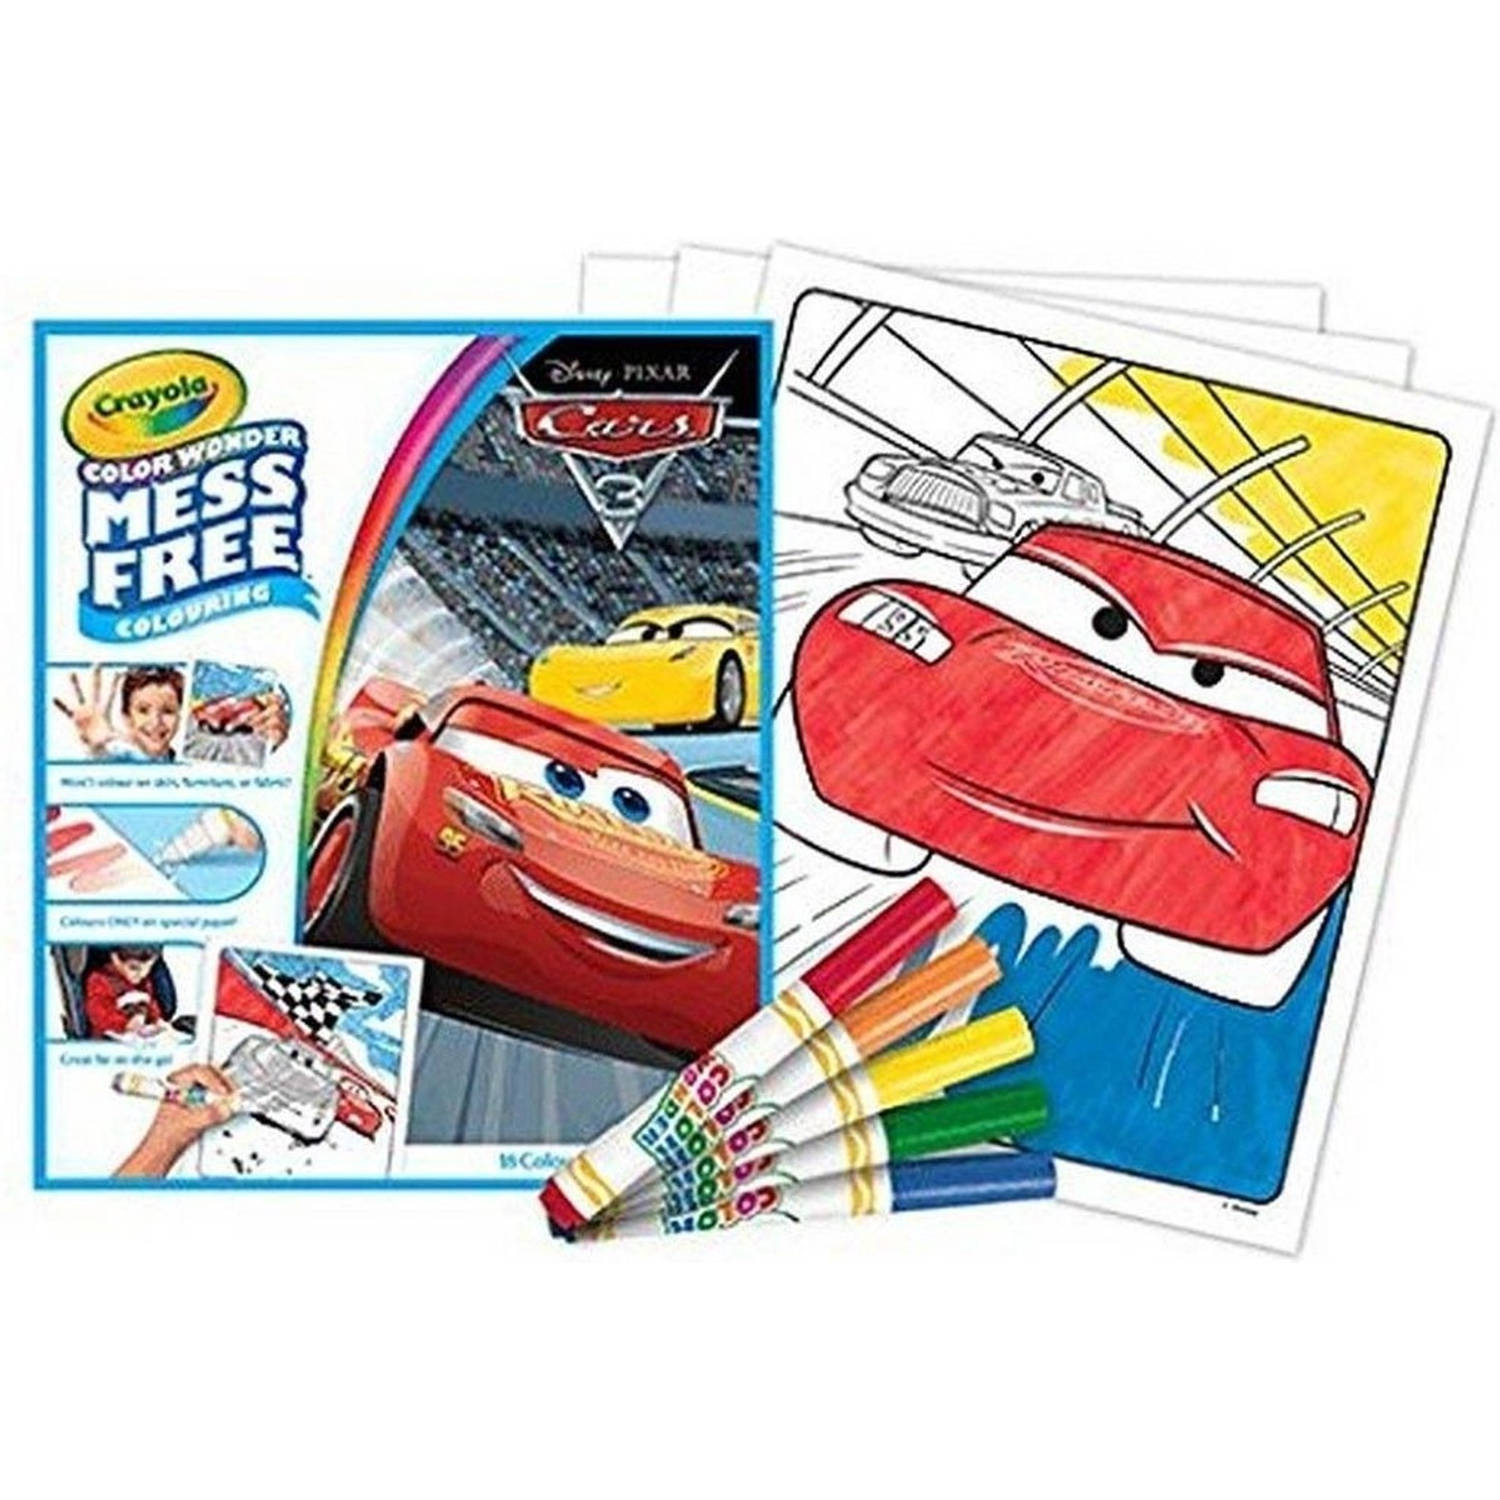 Crayola - Disney Pixar Cars 3 Kleur Wonder Mess - Gratis kleuren